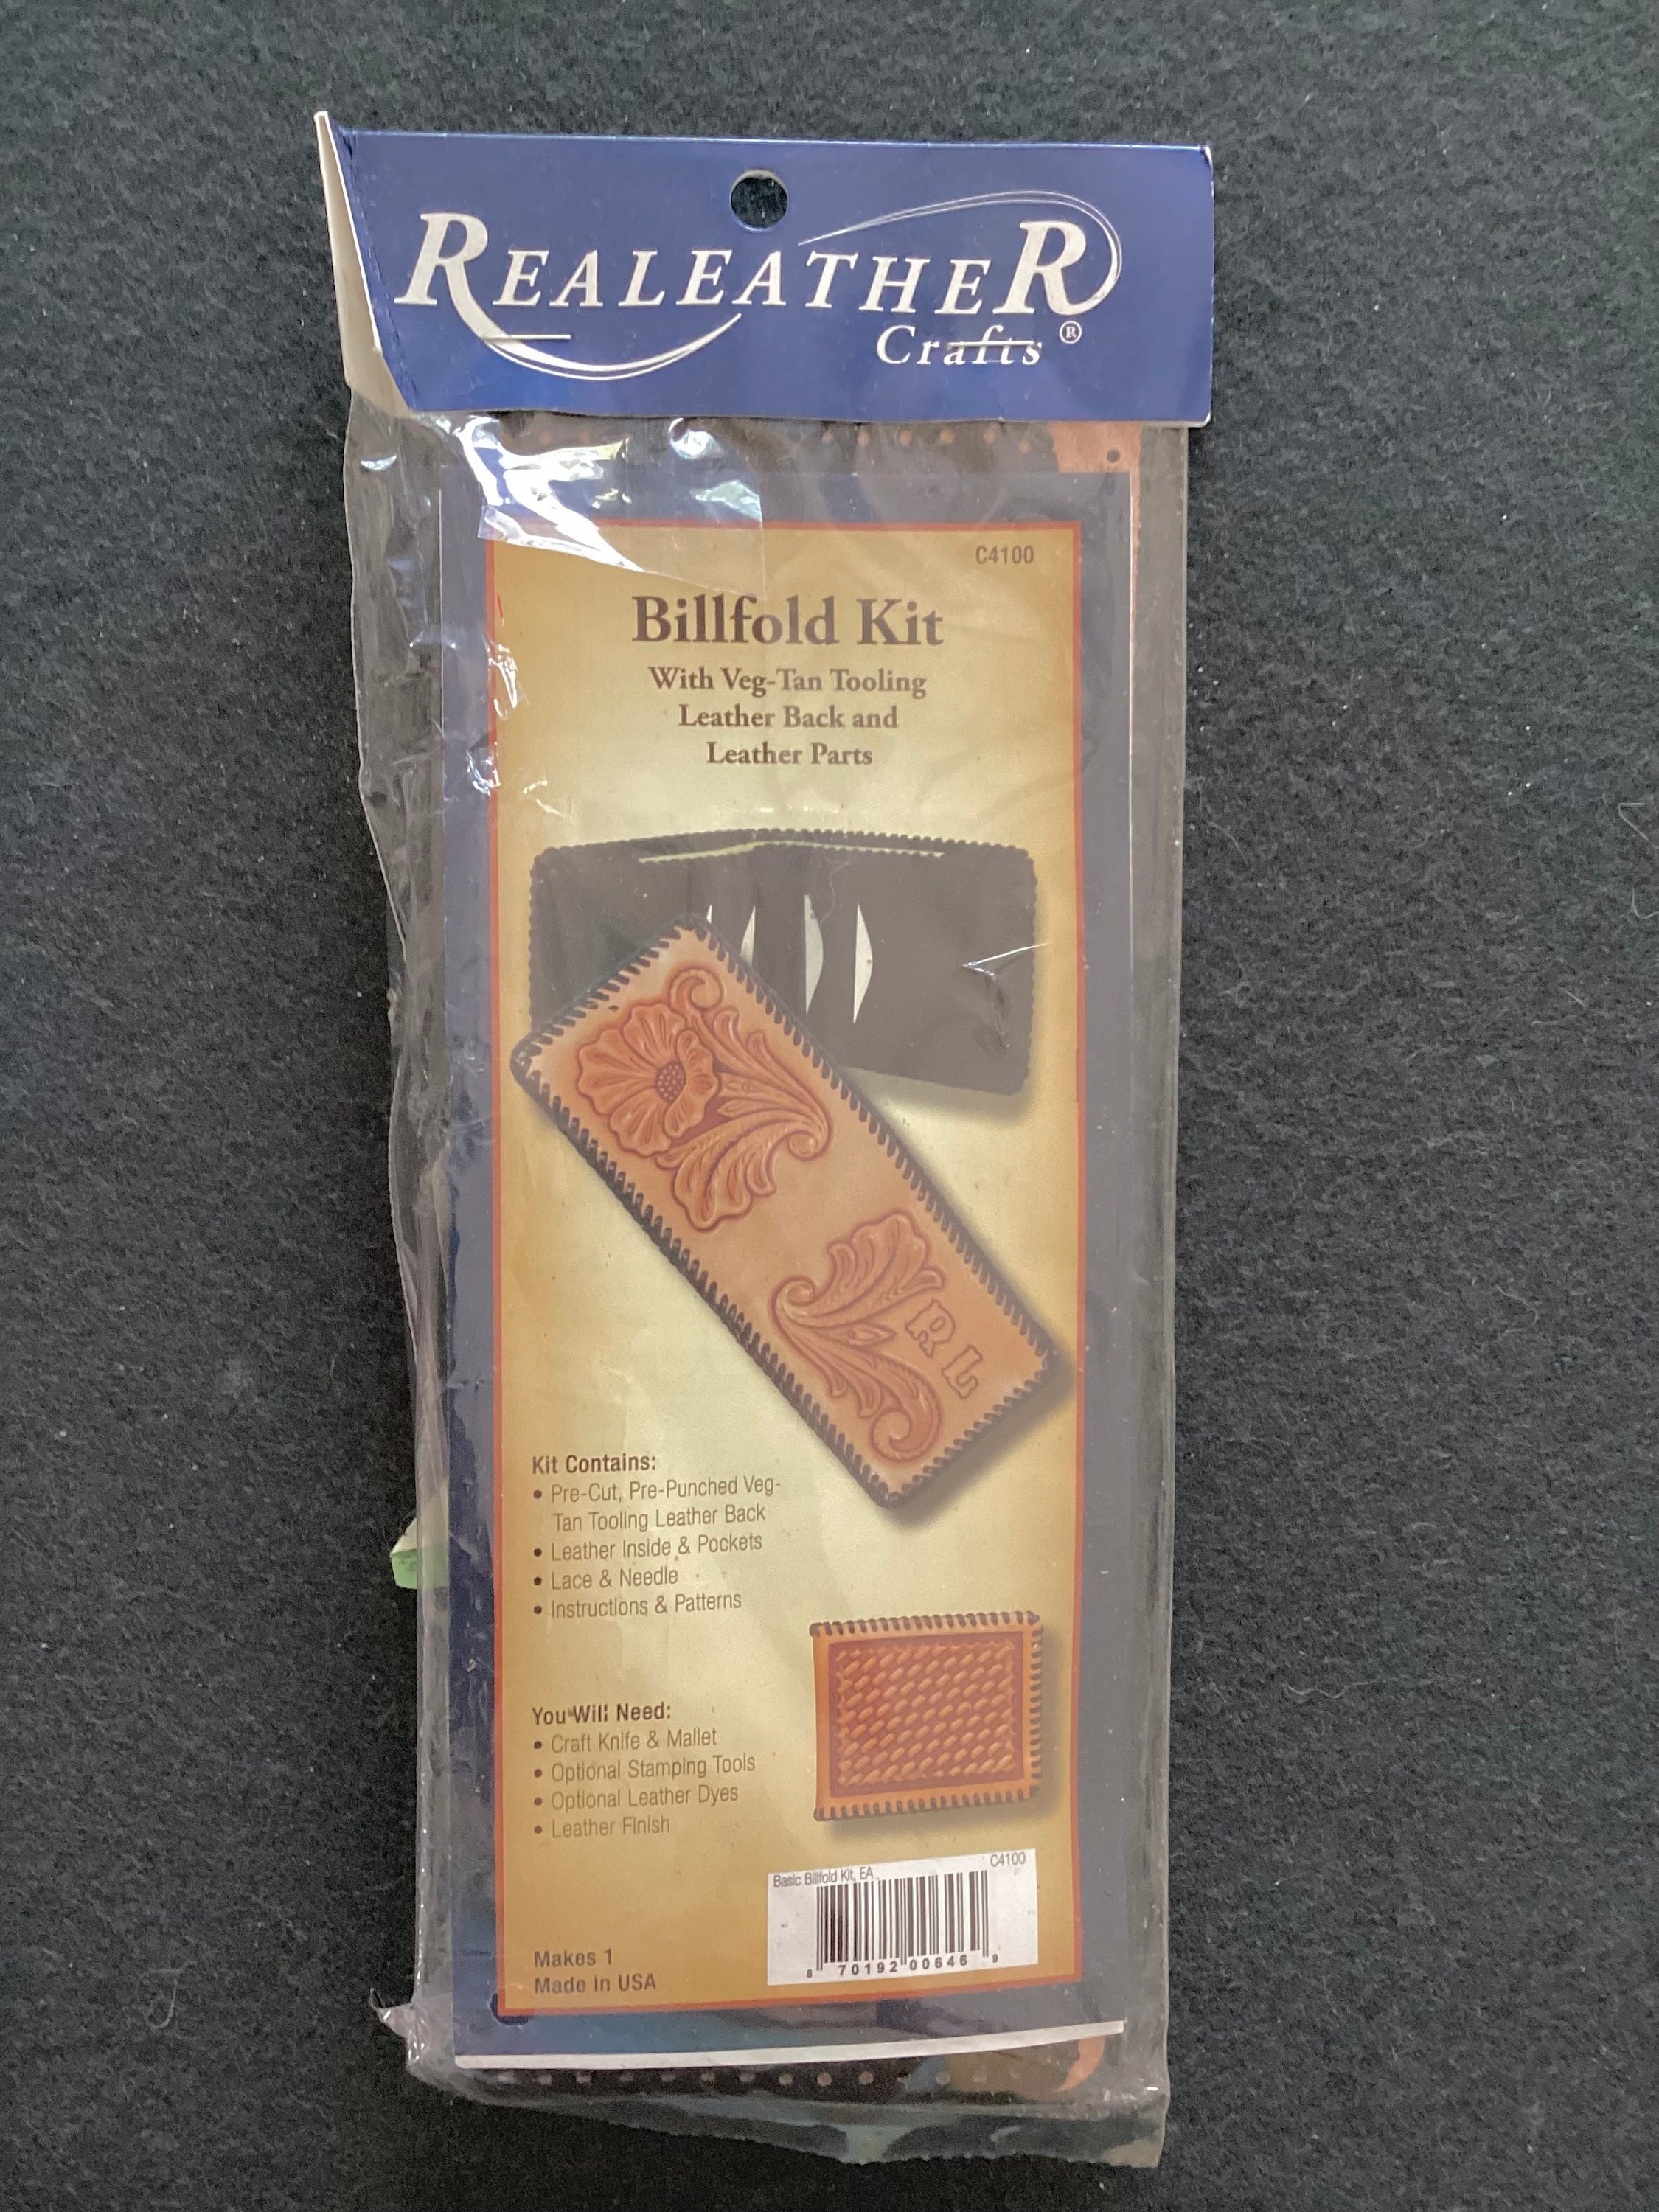 Billfold Kit C4100